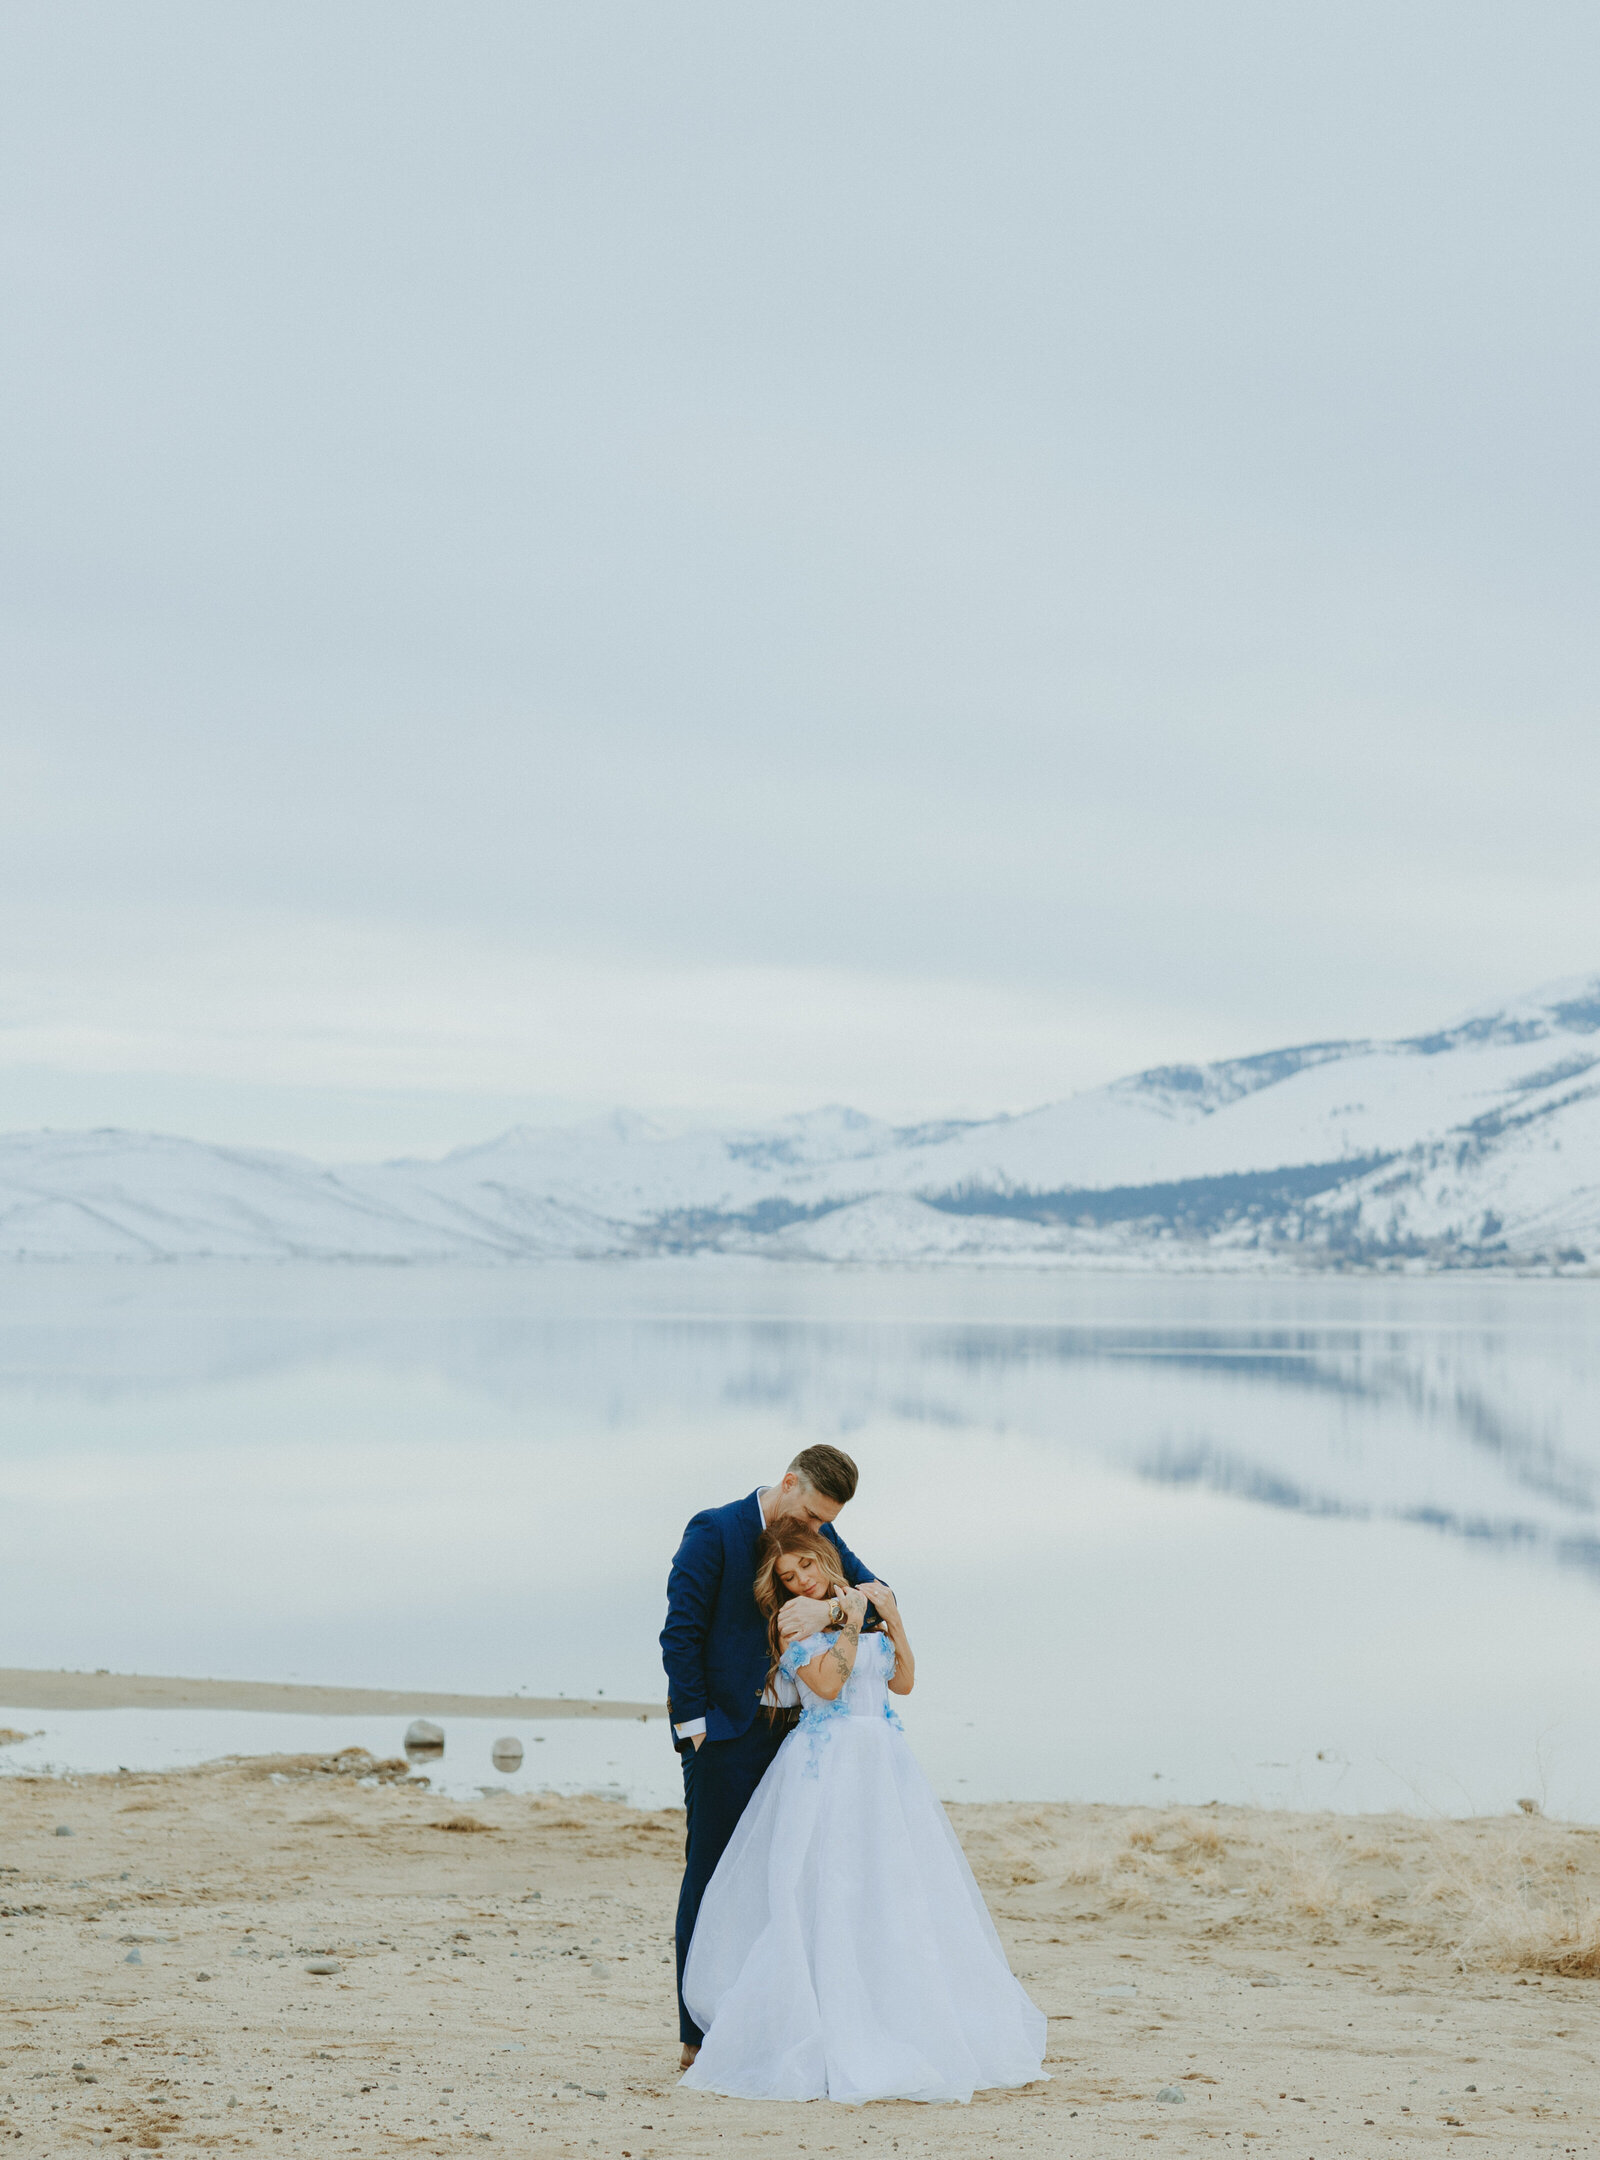 2-18-23 Nikki&Matt elopement Lake Tahoe11-26-22 Jenney&Alex Lake Tahoe Beach-12